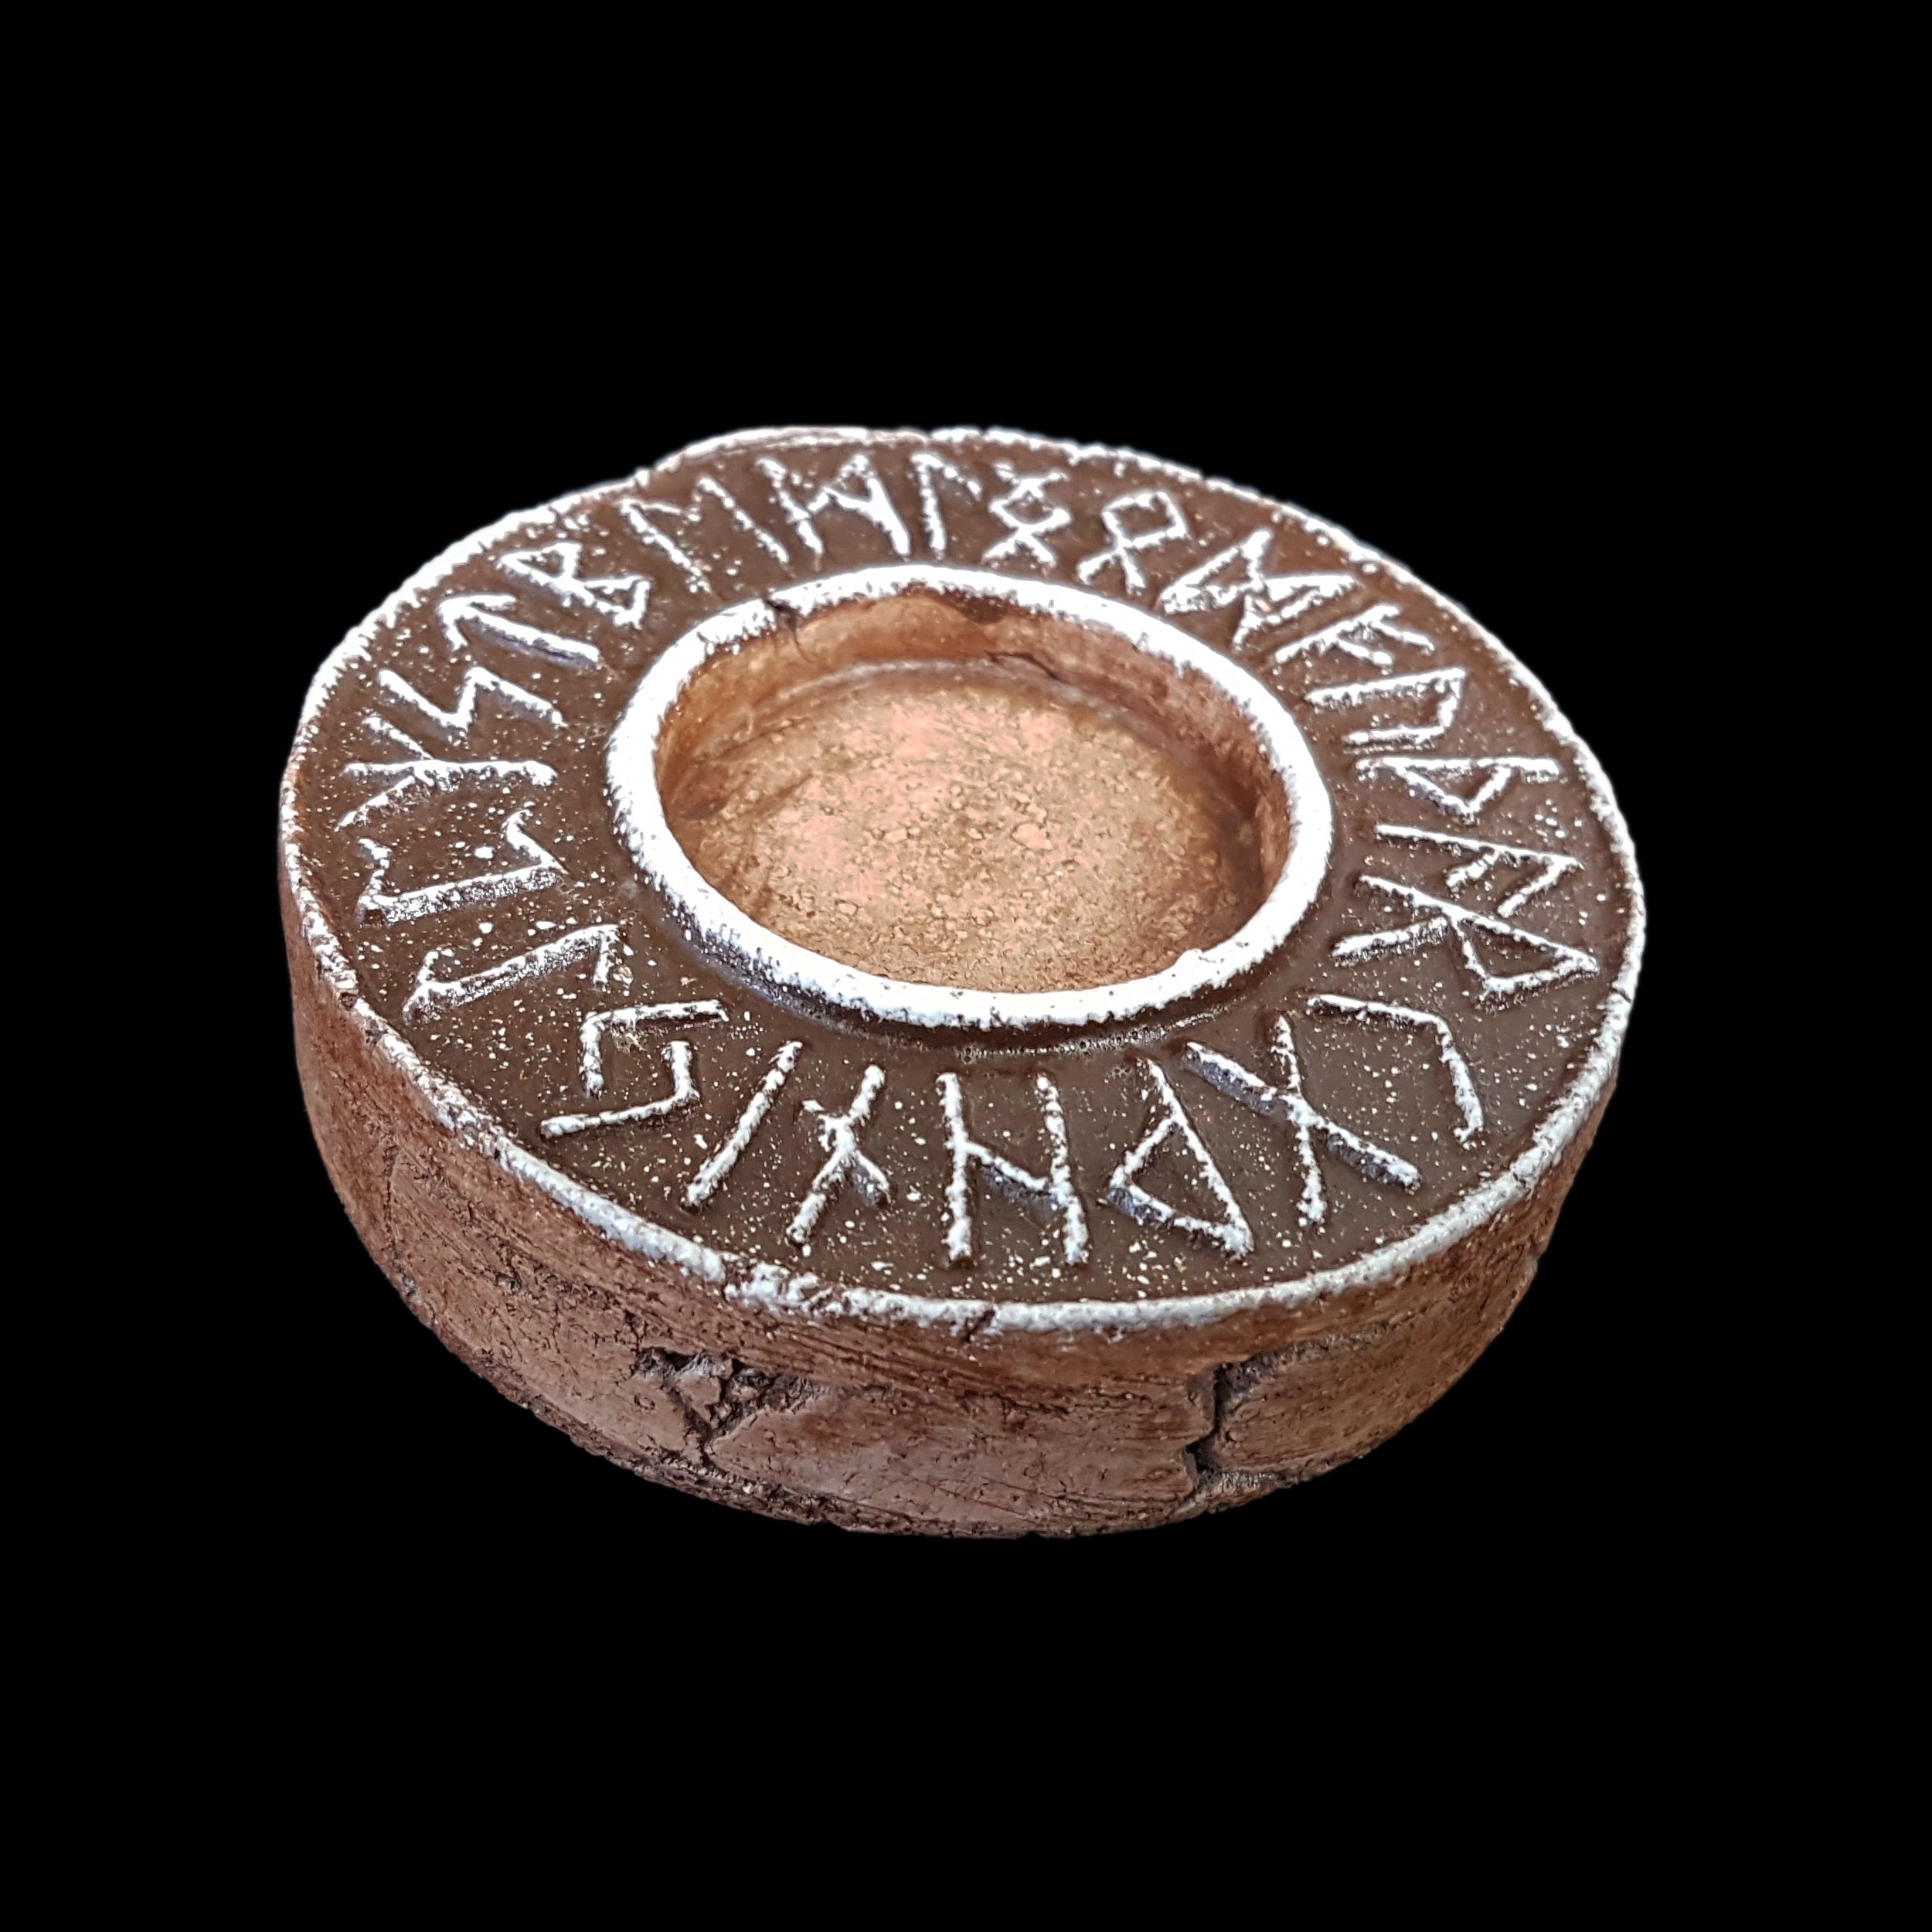 Hand-Crafted Ceramic Elder Futhark Runic Altar - Asatru / Heathen